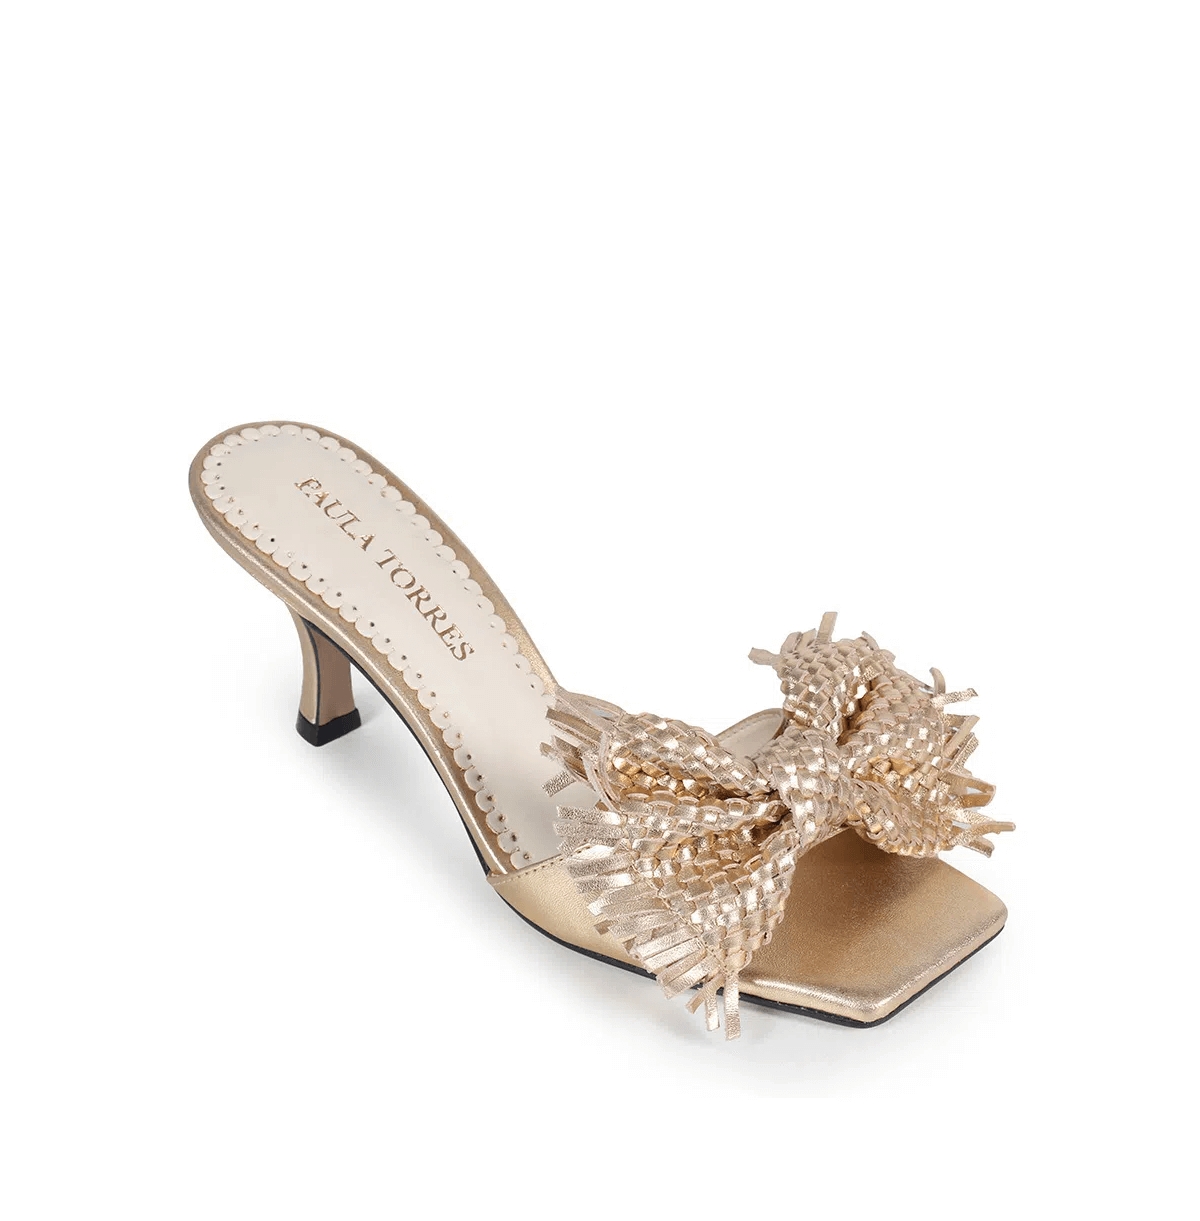 Shoes Women's Trento Mule - Gold